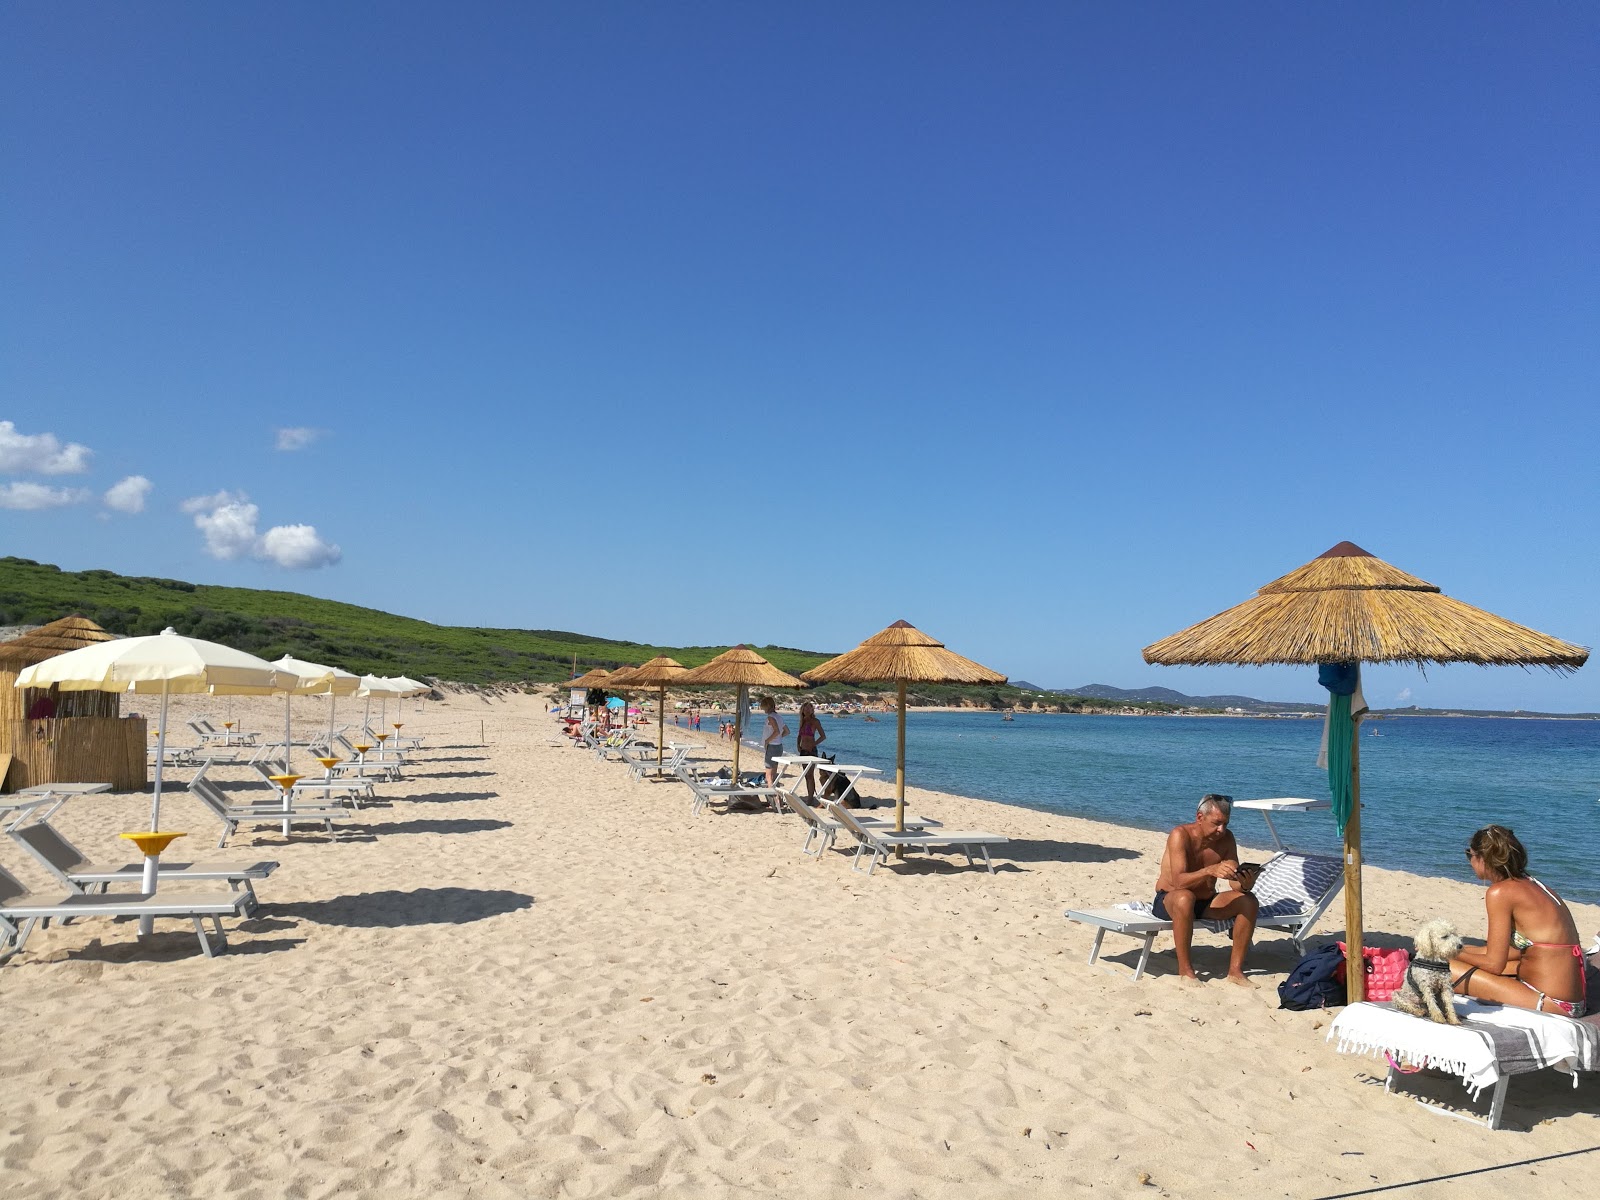 Photo of Spiaggia Monti Russu located in natural area